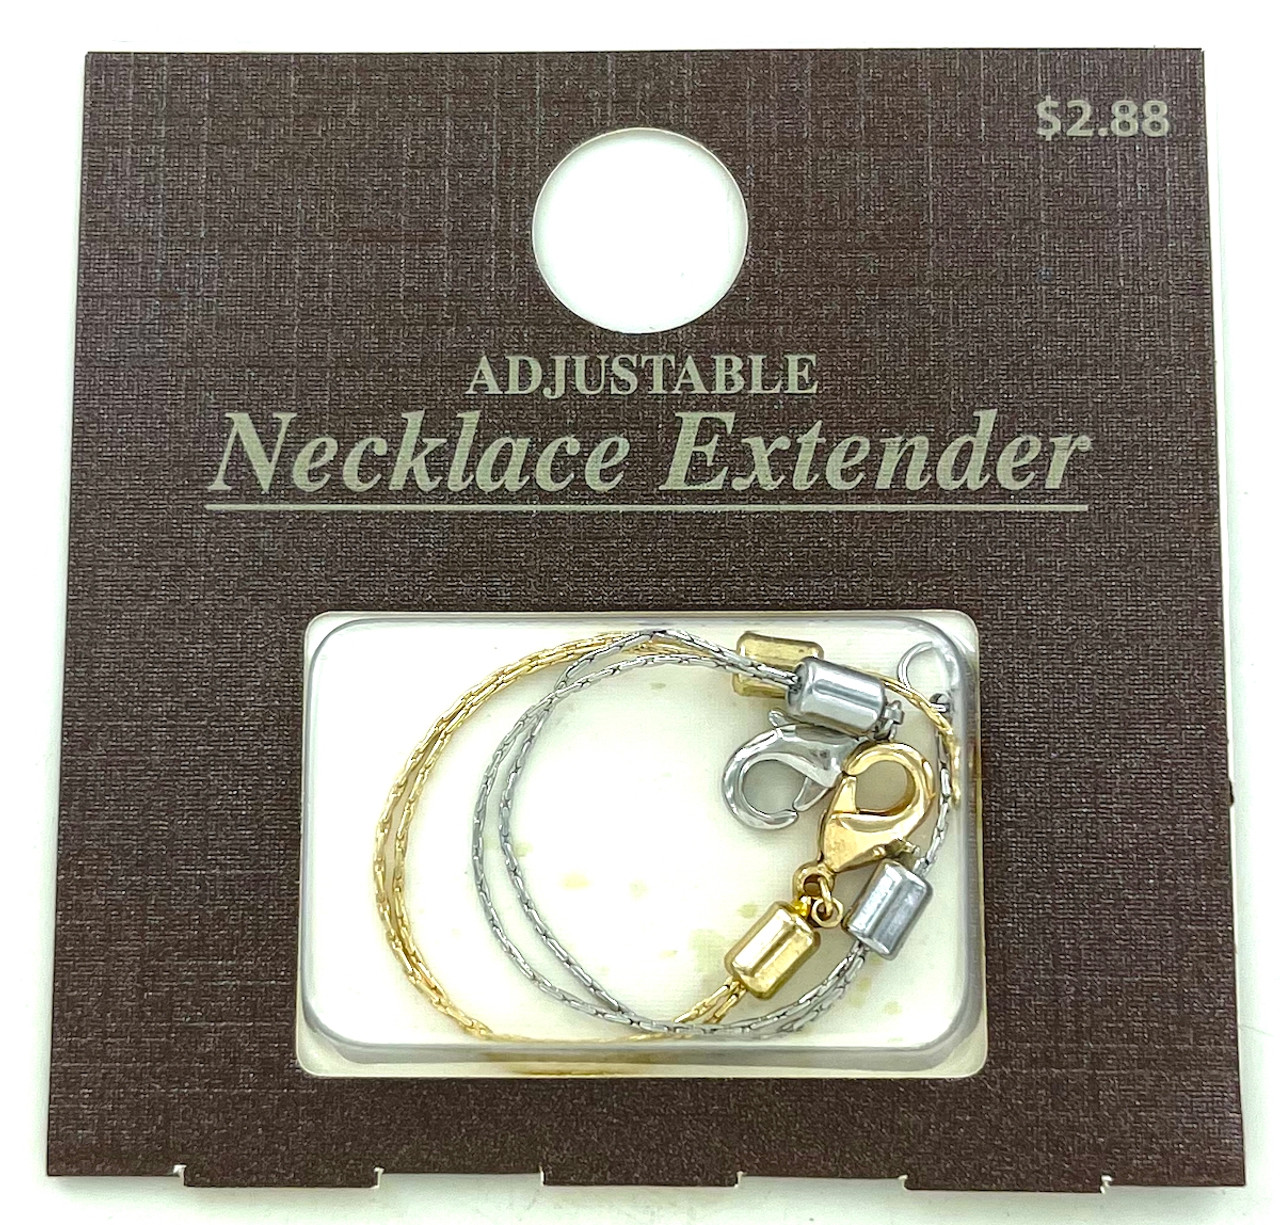 Wholesale Necklace Extenders by the Dozen